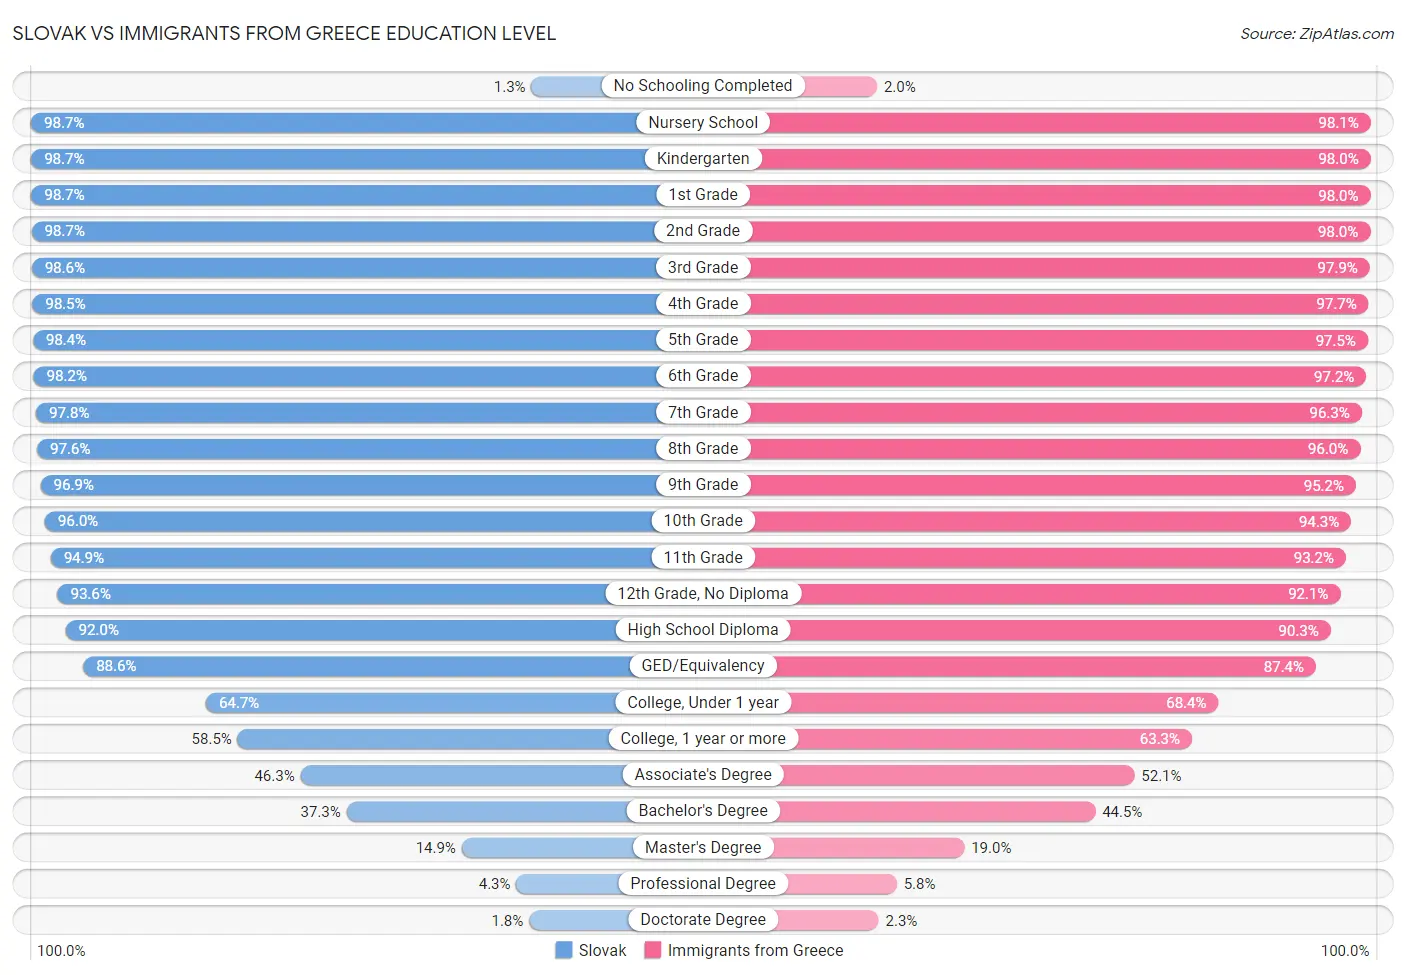 Slovak vs Immigrants from Greece Education Level